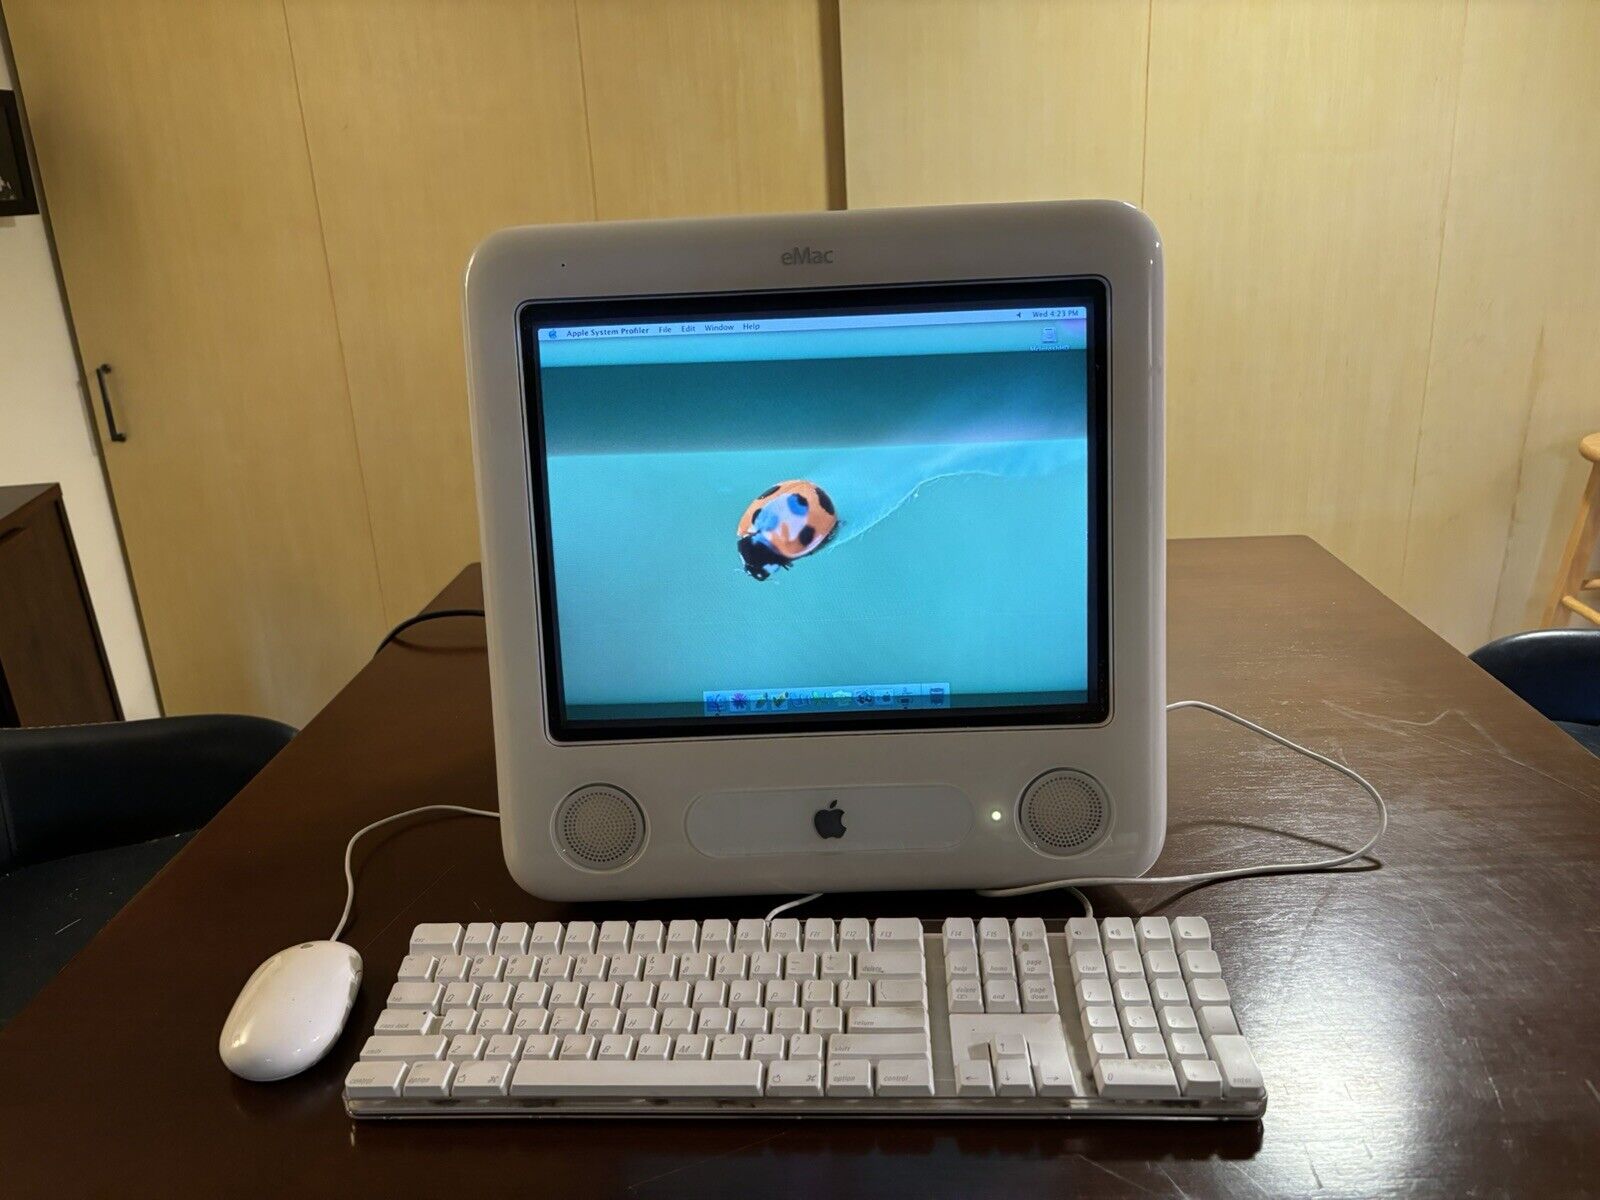 eMac PowerPC G4 800MHz Mac OSX 256MB